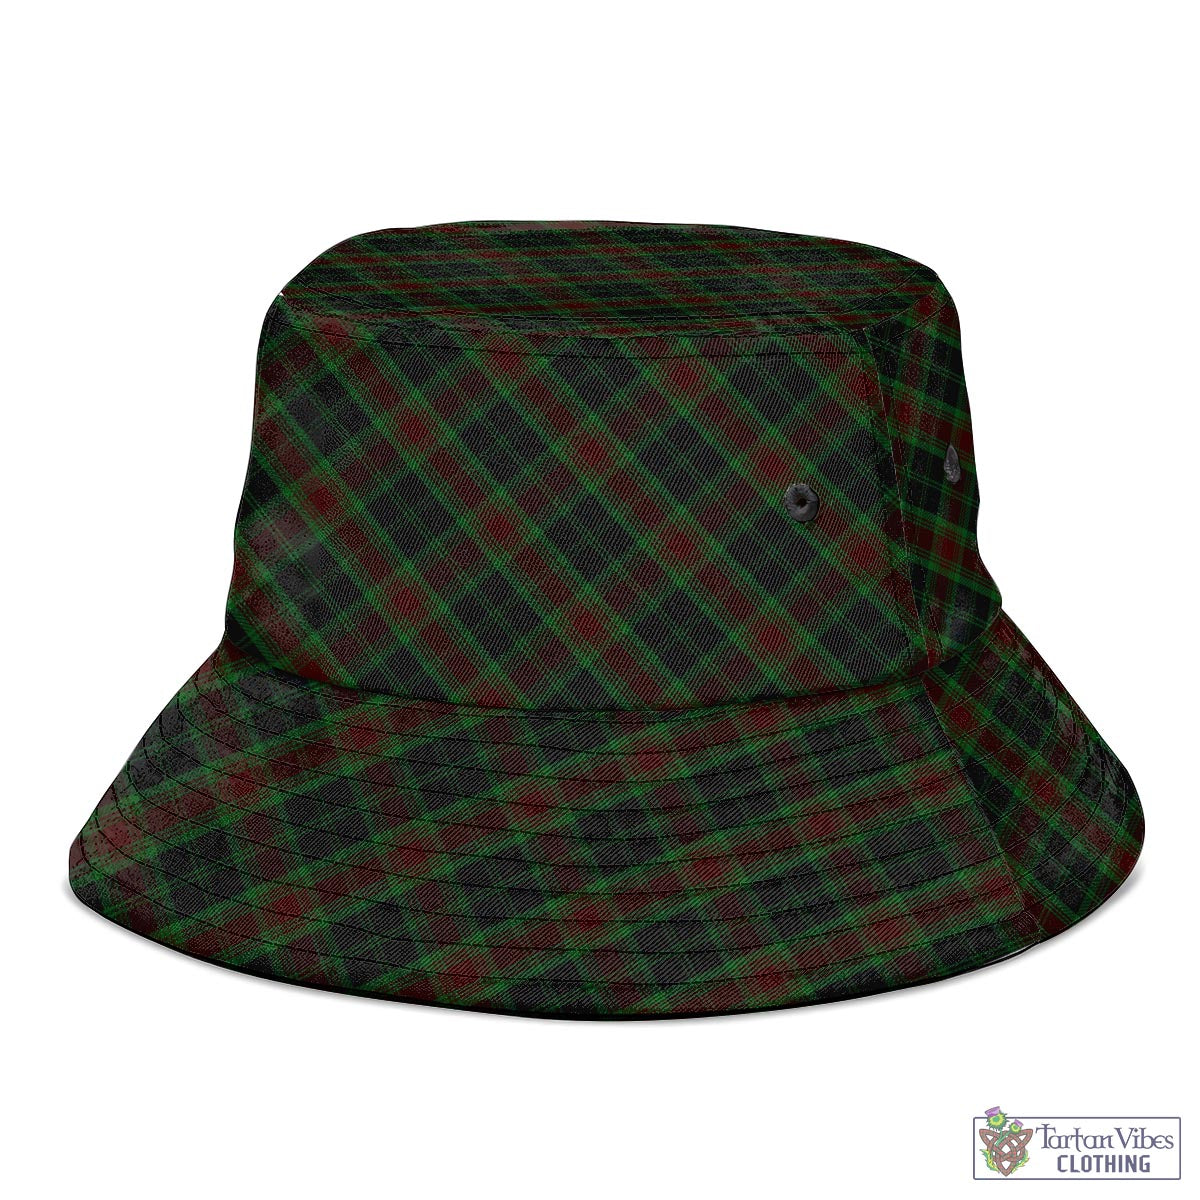 Tartan Vibes Clothing Carlow County Ireland Tartan Bucket Hat